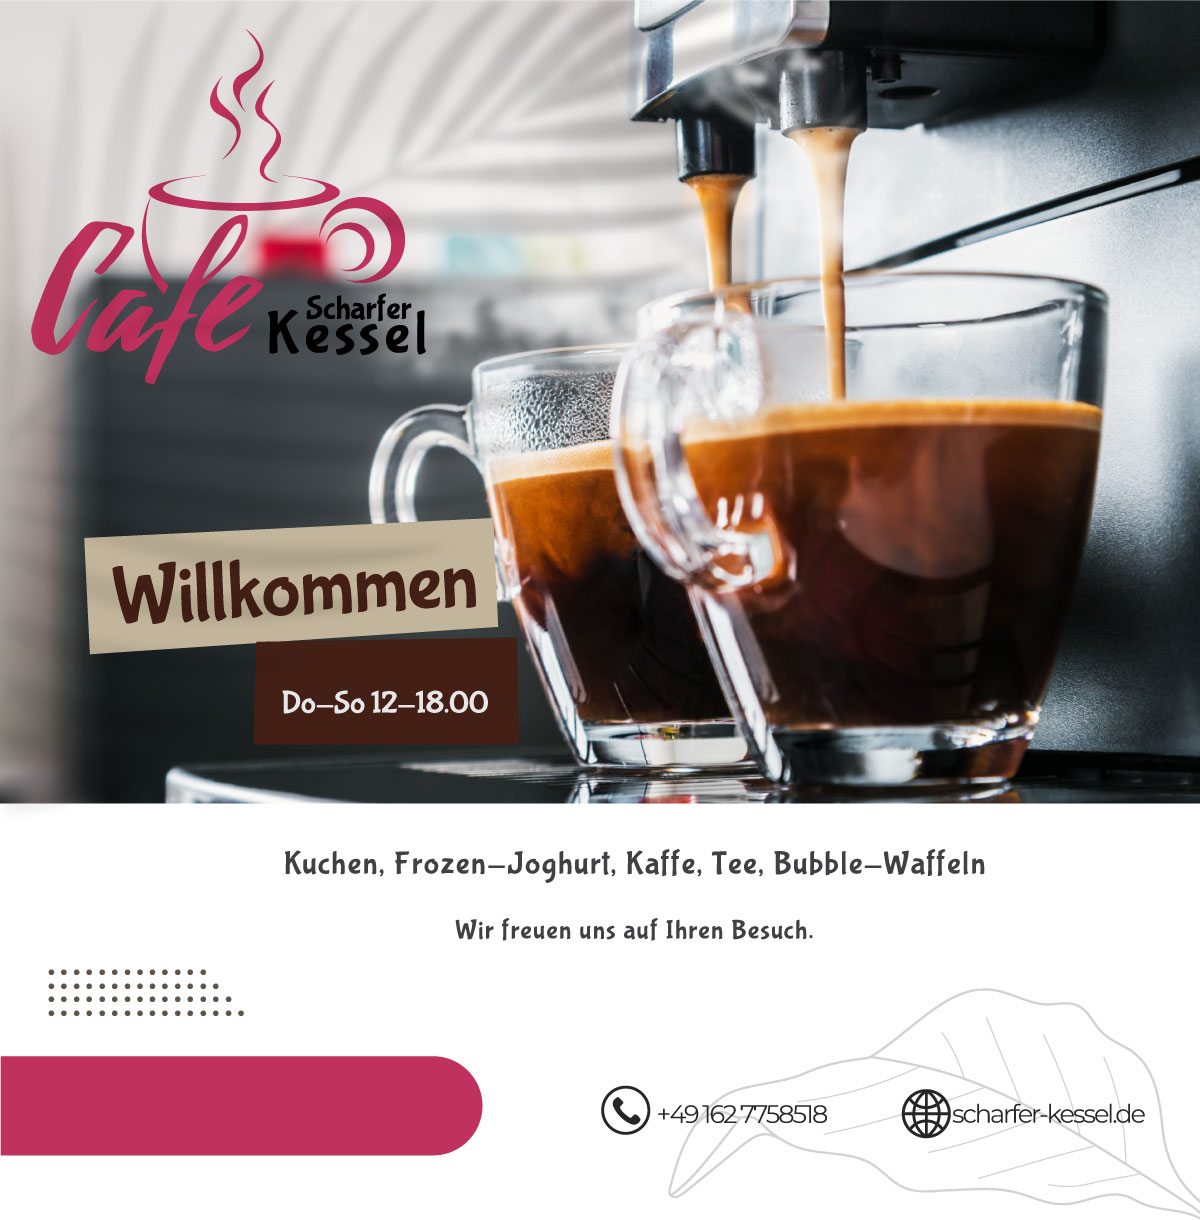 coffee_ii Restaurant & Pension "Scharfer Kessel" | Datenschutz